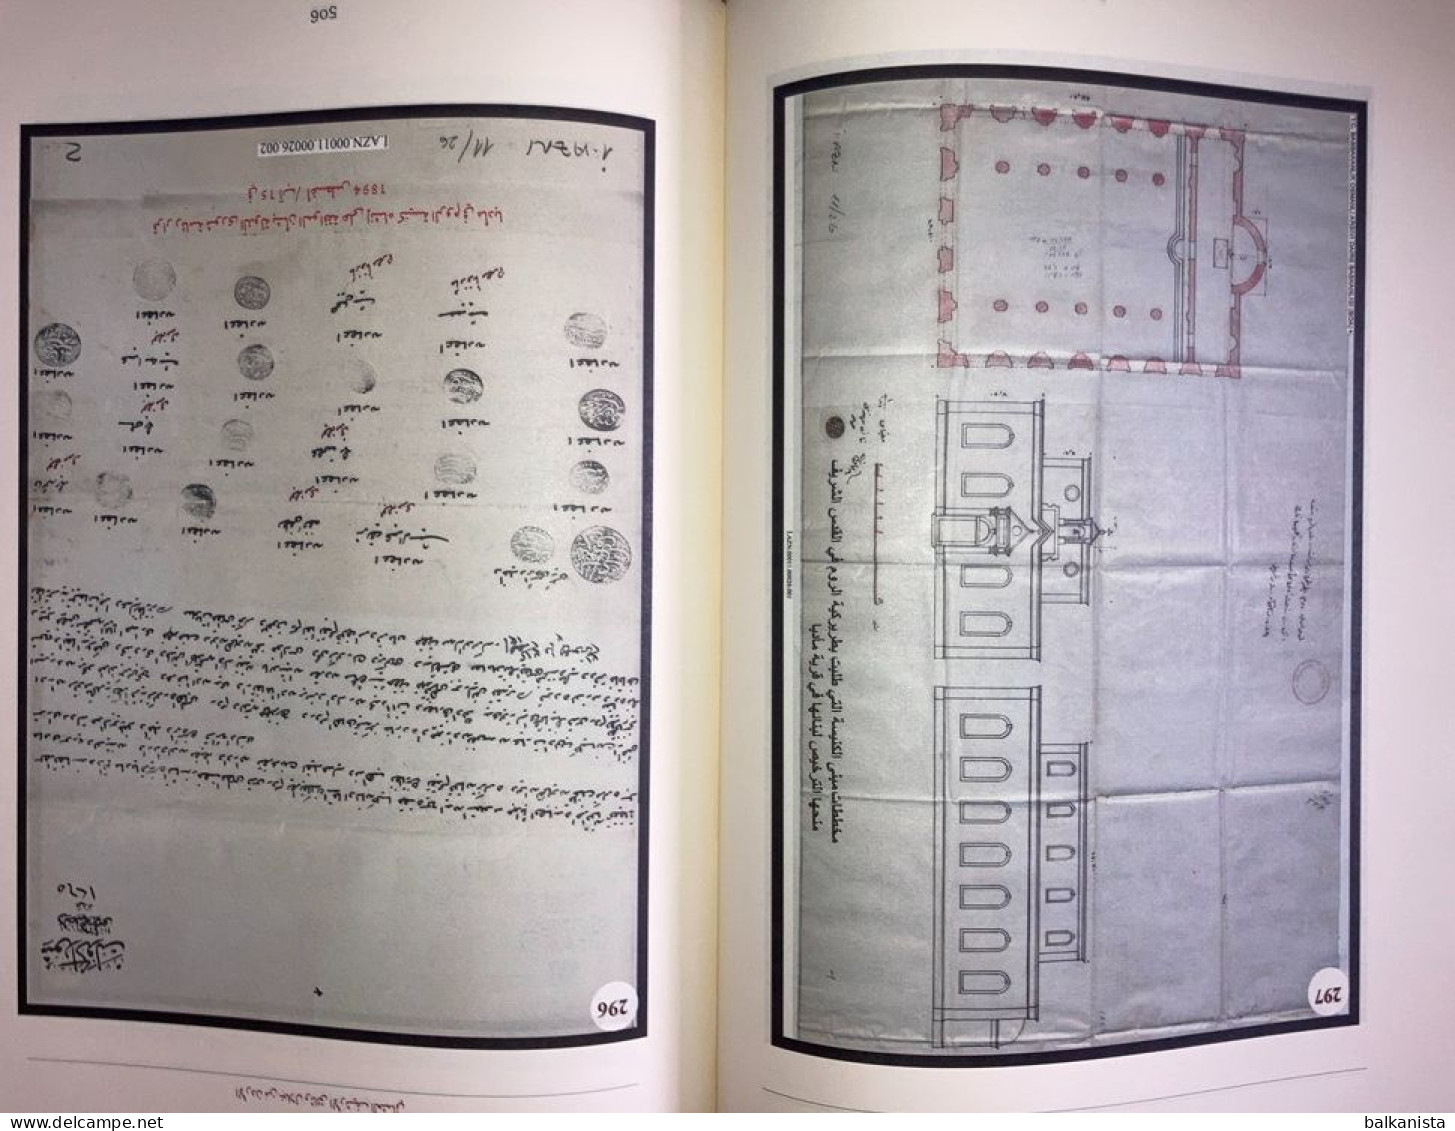 Jordan In The Ottoman Archive Documents - Arabia Illustrated Arabic